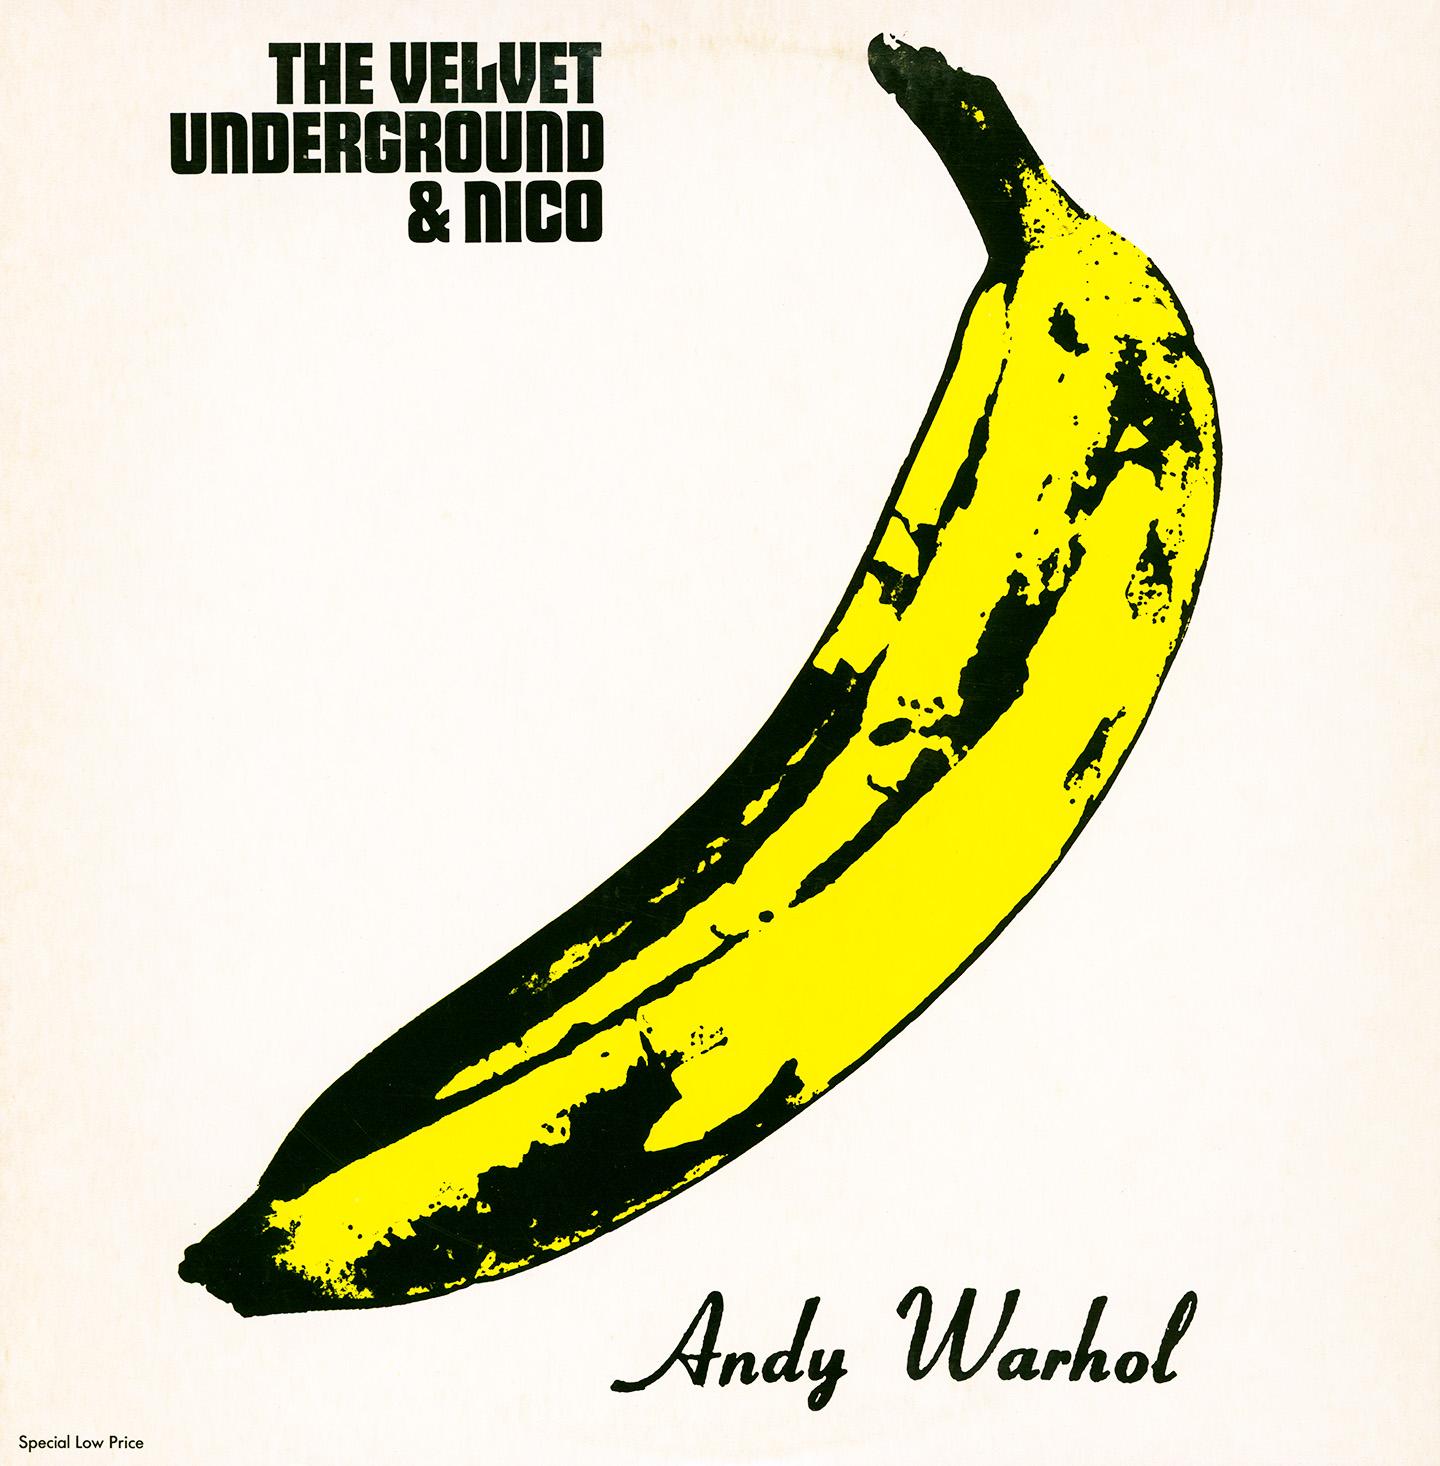 Warhol Banana Cover: Nico & The Velvet Underground Vinyl Record - Mixed Media Art by Andy Warhol